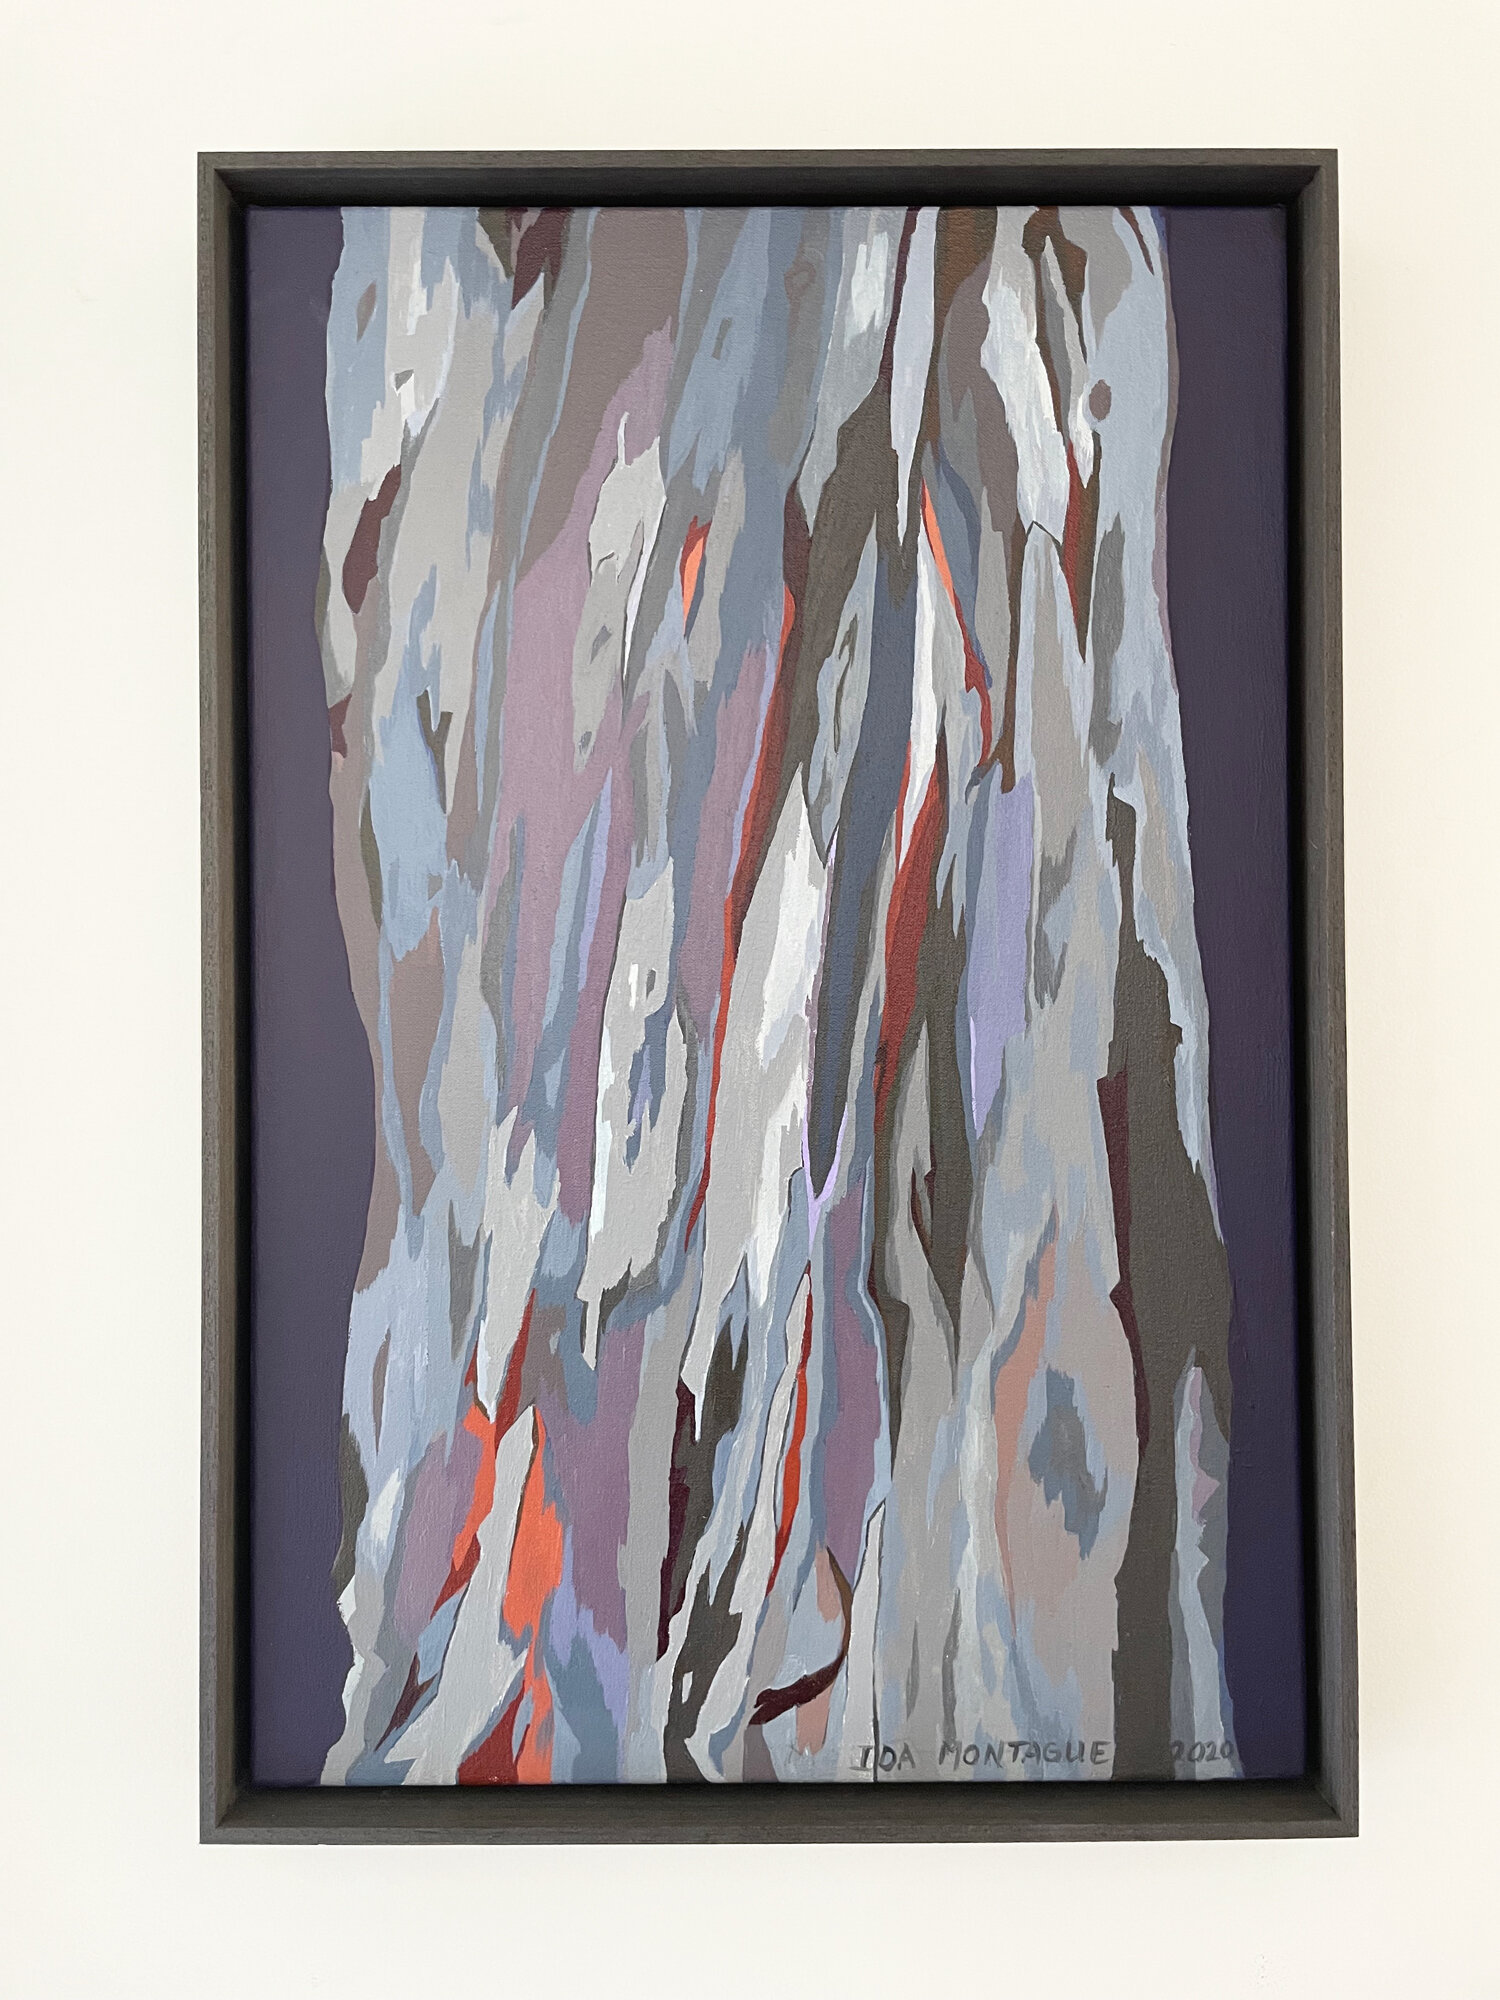    Alpine Blues I  , Acrylic polymer on stretched canvas (black timber framed), 90 x 60cm © Ida Montague   ENQUIRE   